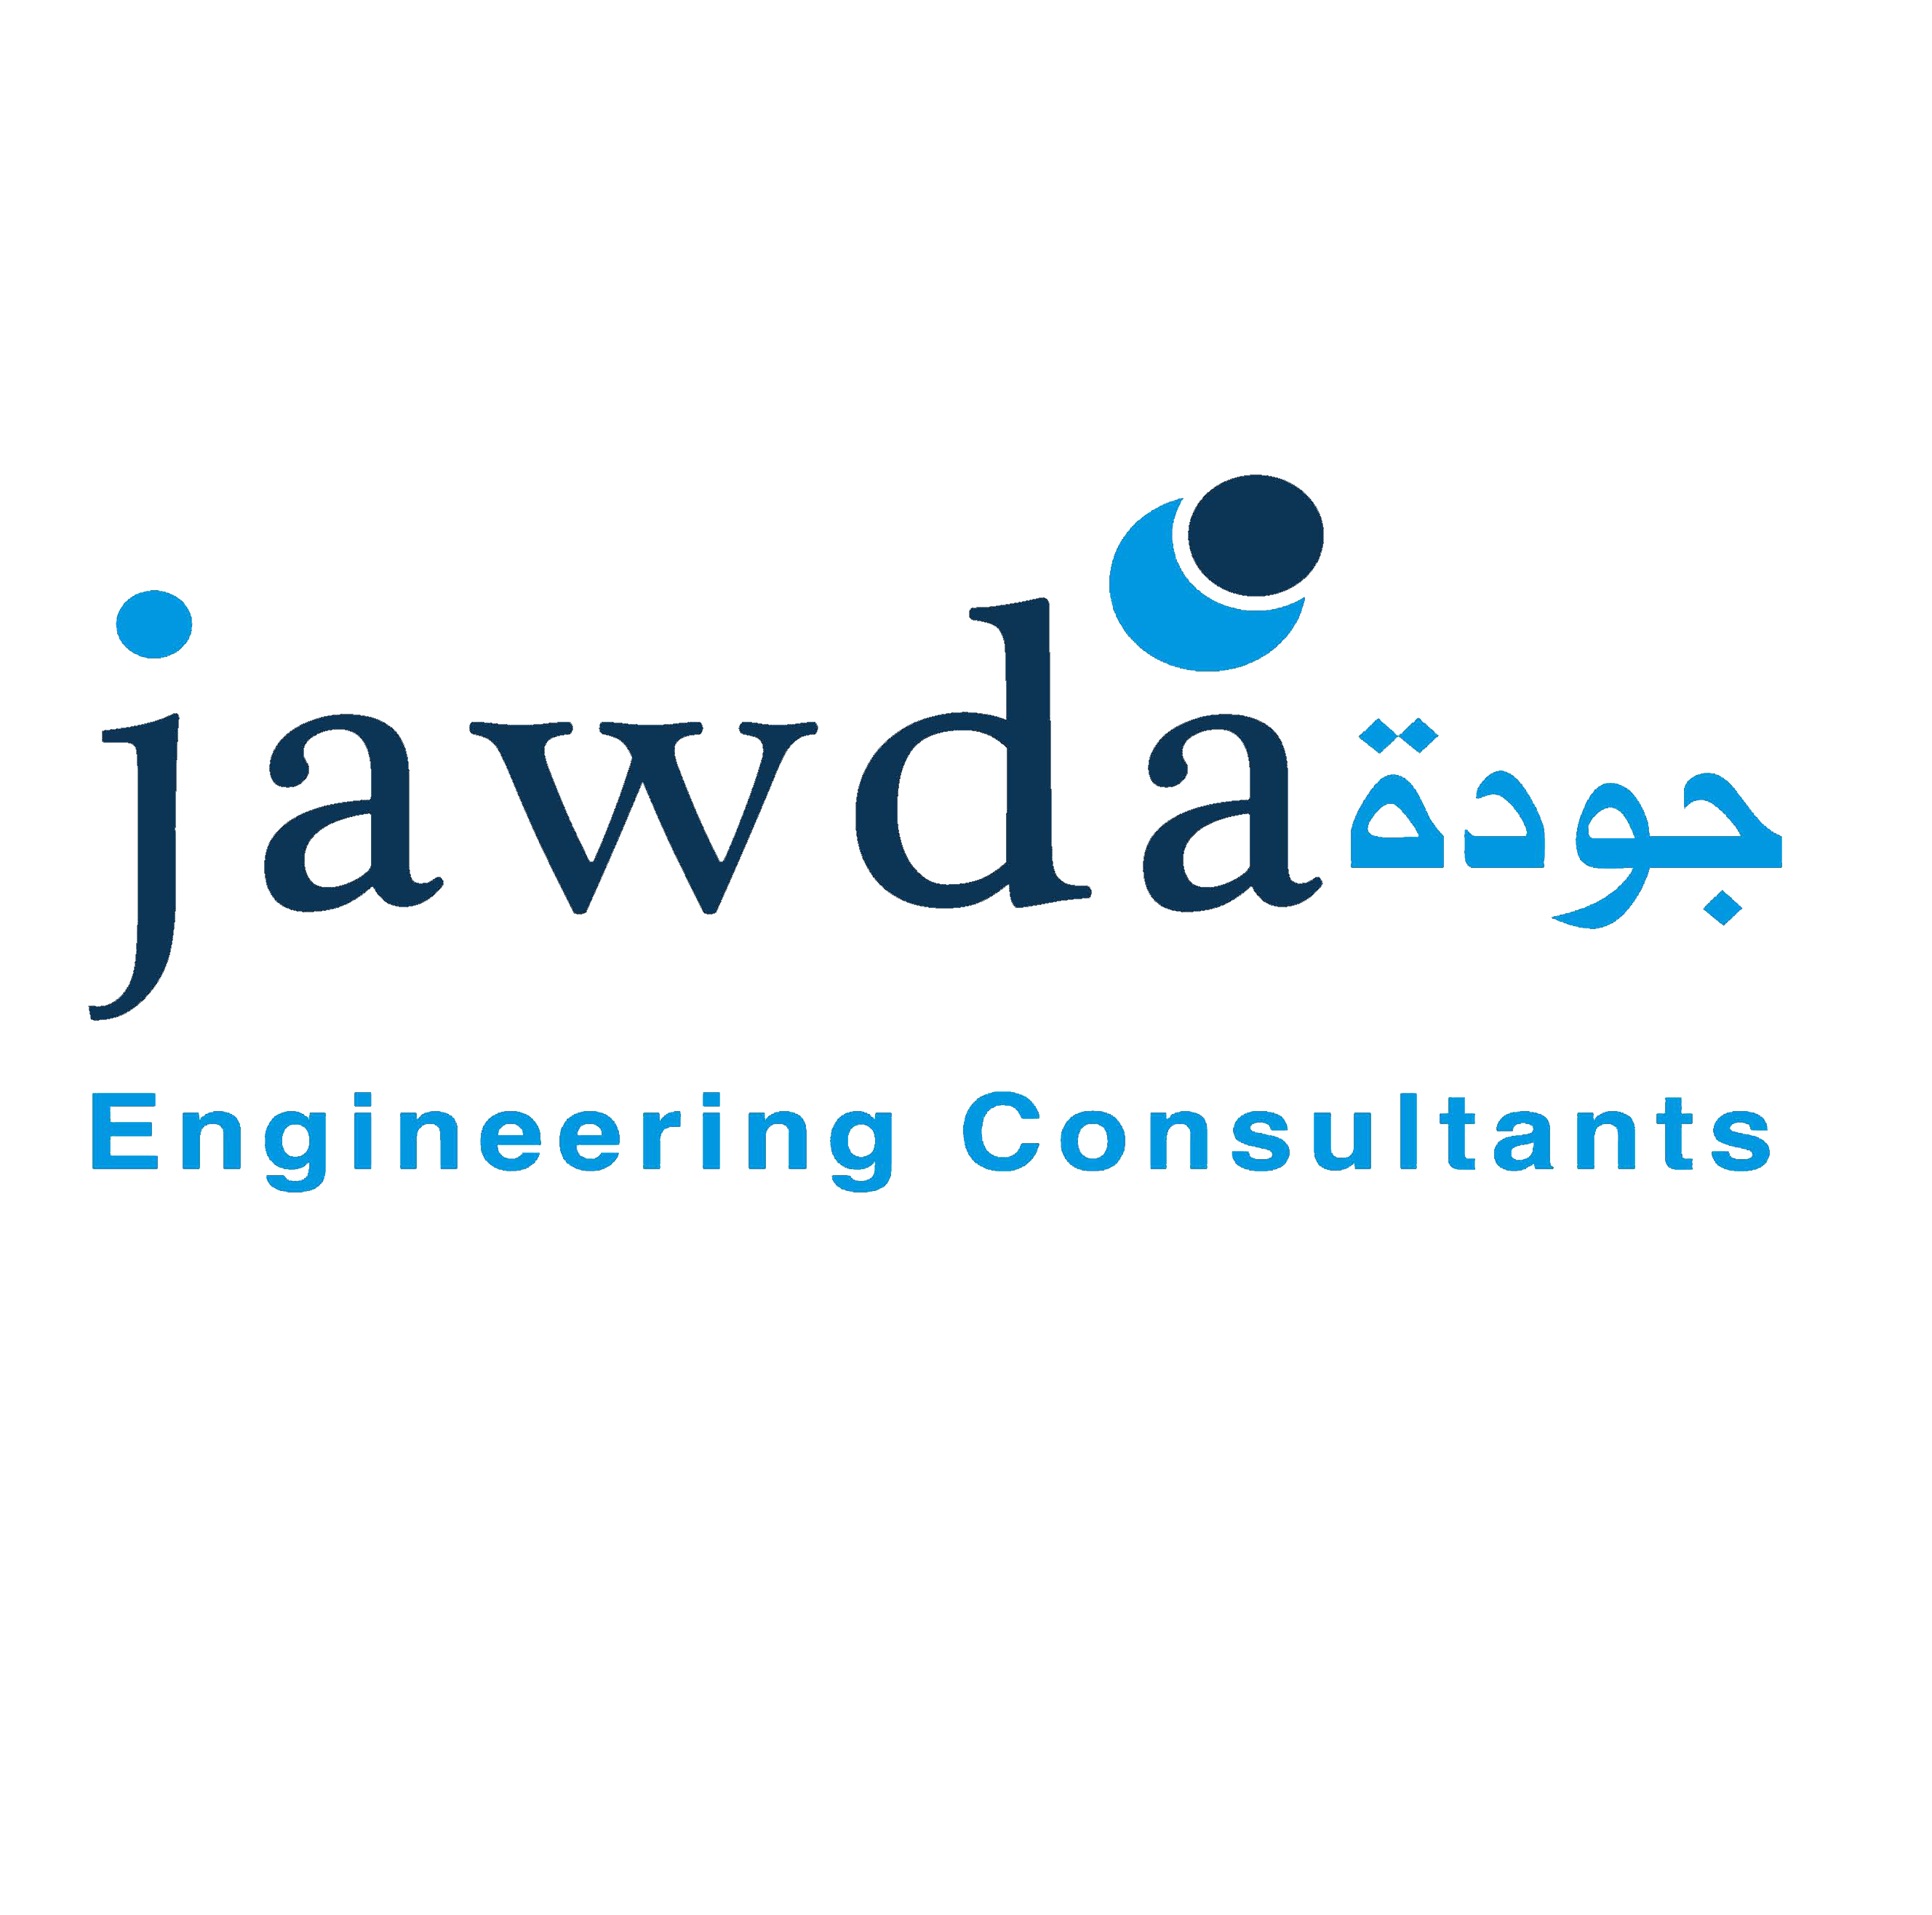 JAWDA Engineering Consultants